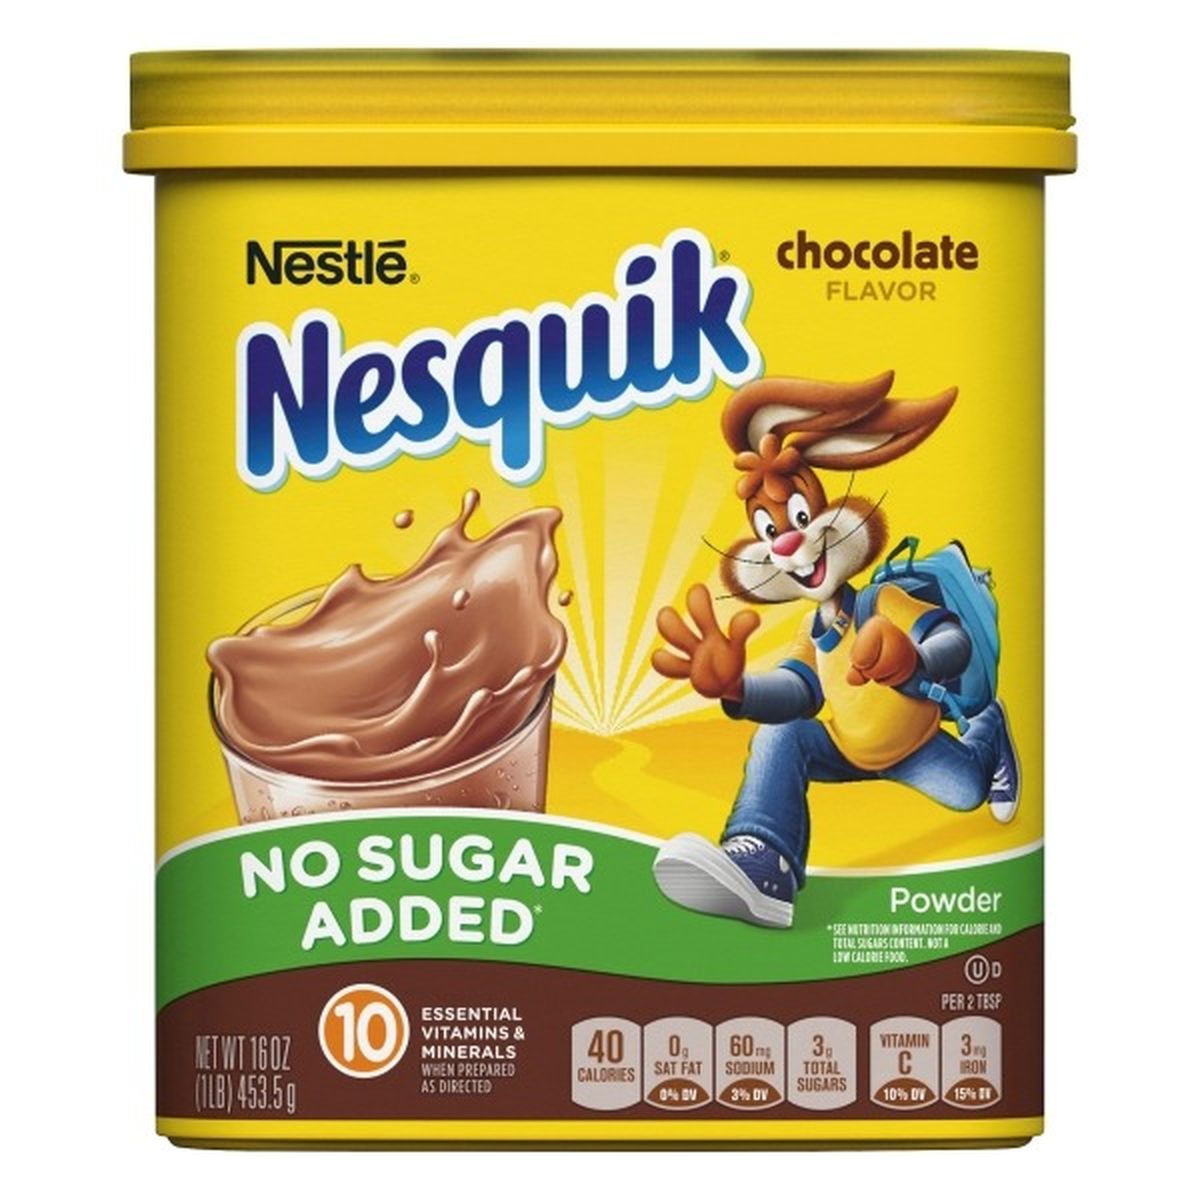 Calories in Nestle Nesquik Powder, No Sugar Added, Chocolate Flavor